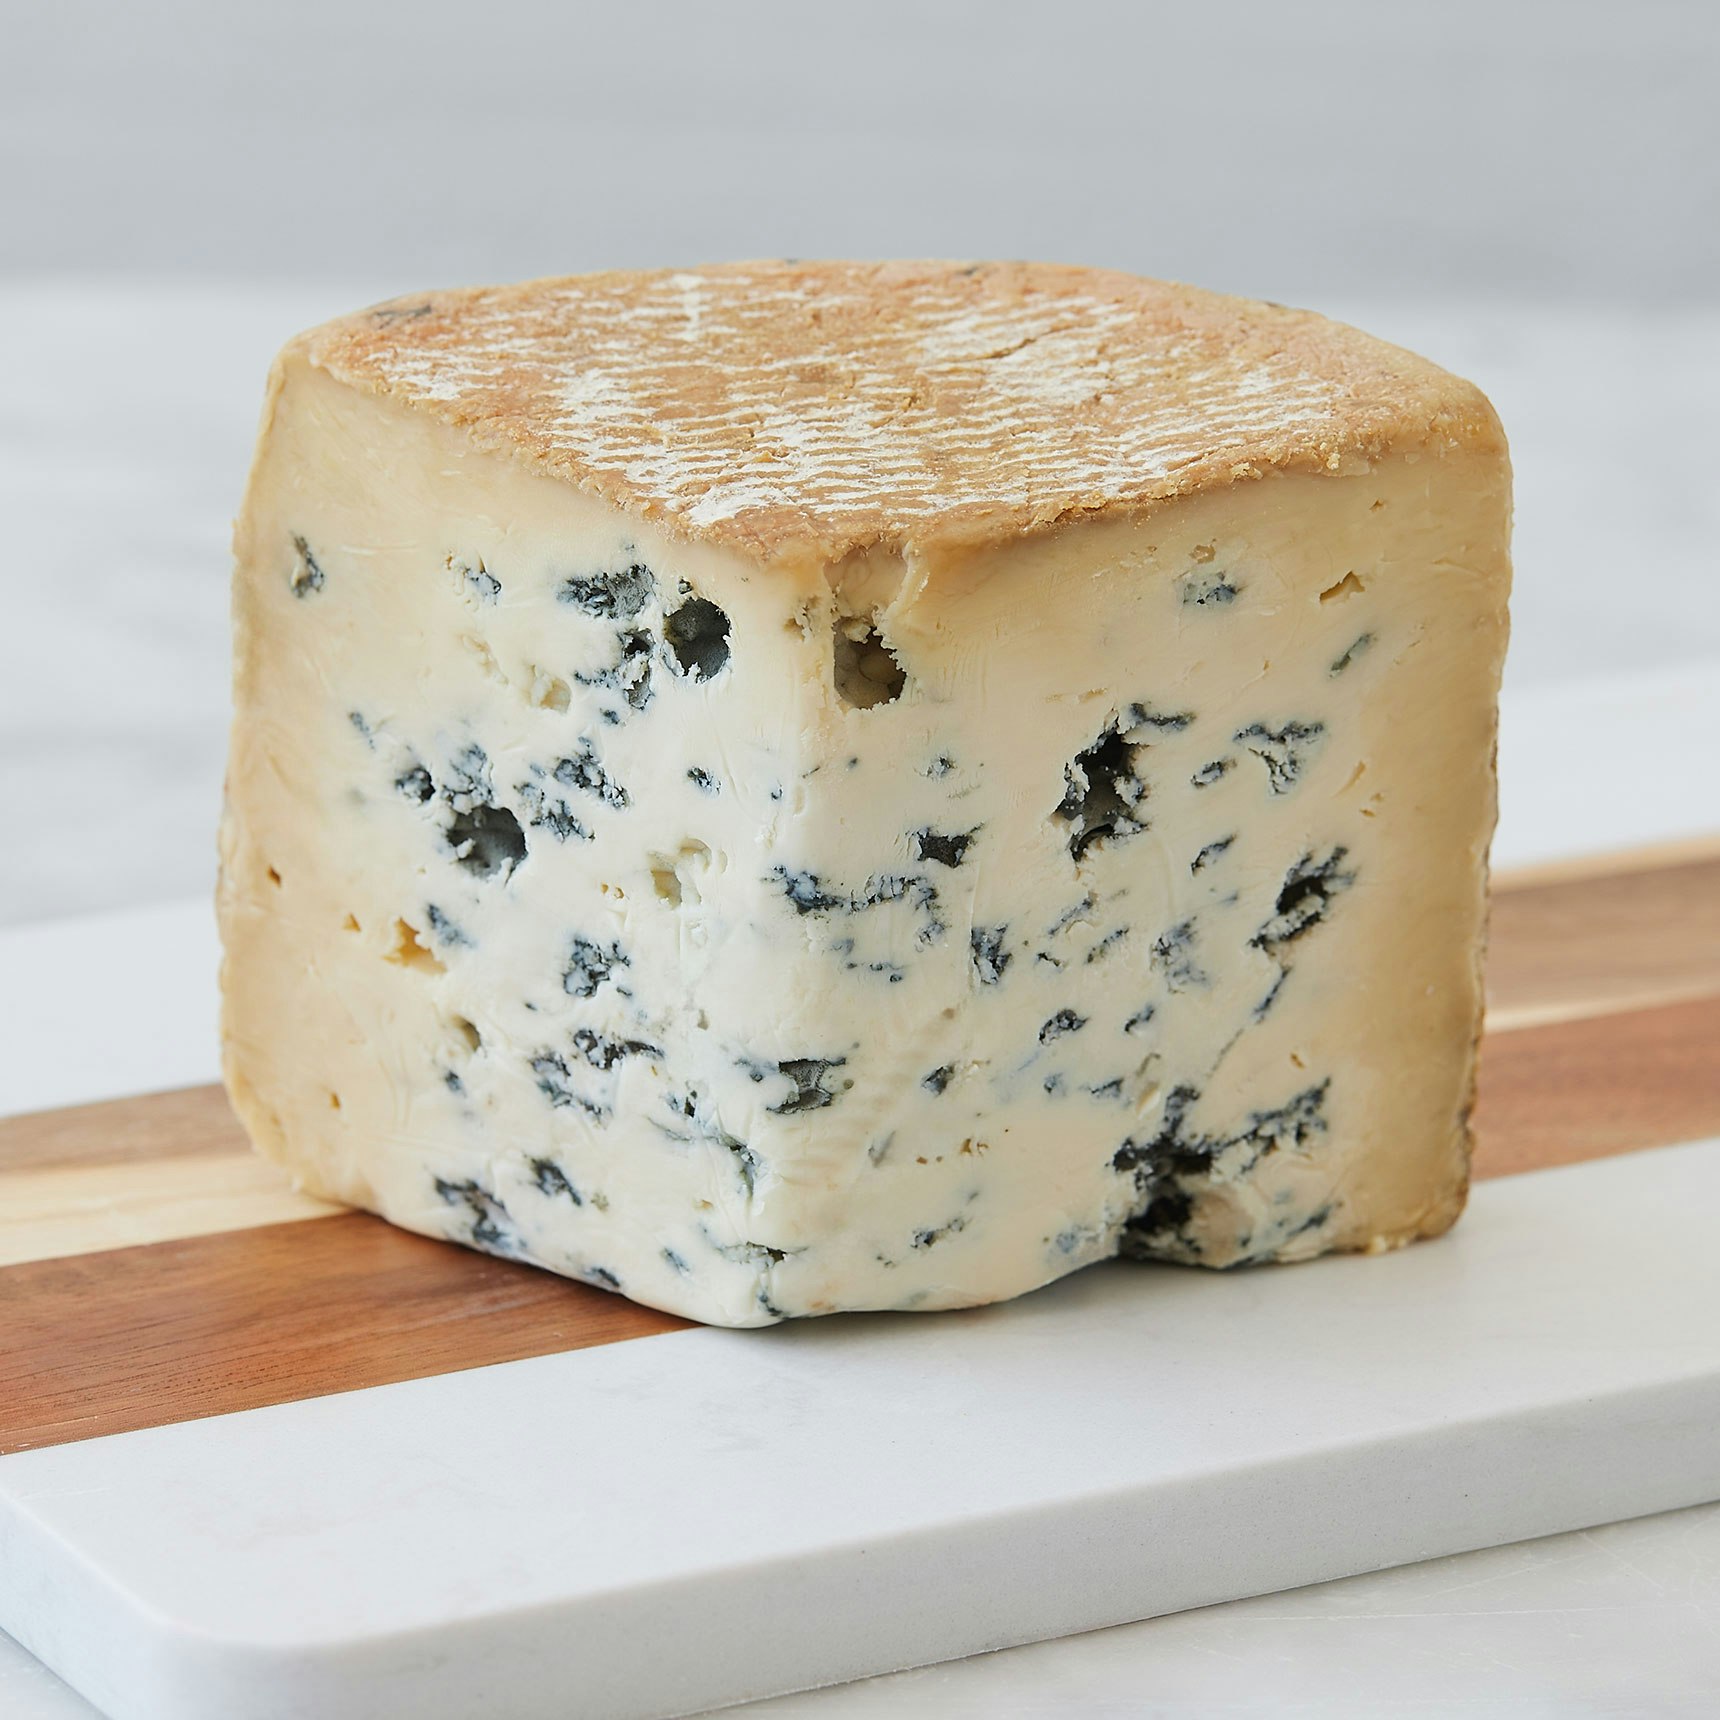 jasper hill farm bayley hazen blue cheese